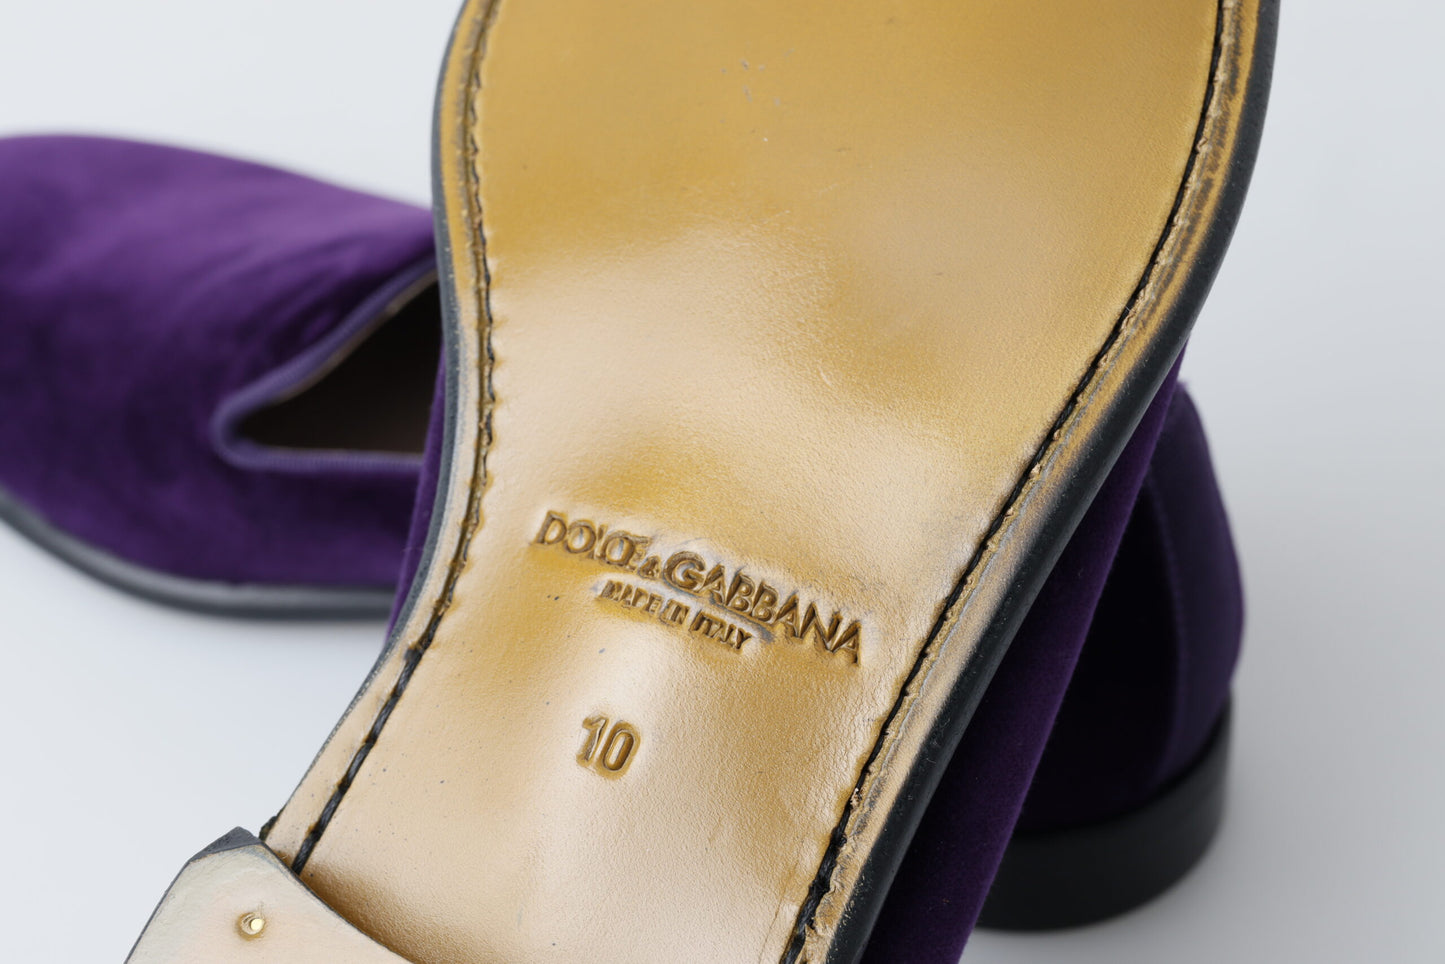 Elegant Purple Slipper Loafers